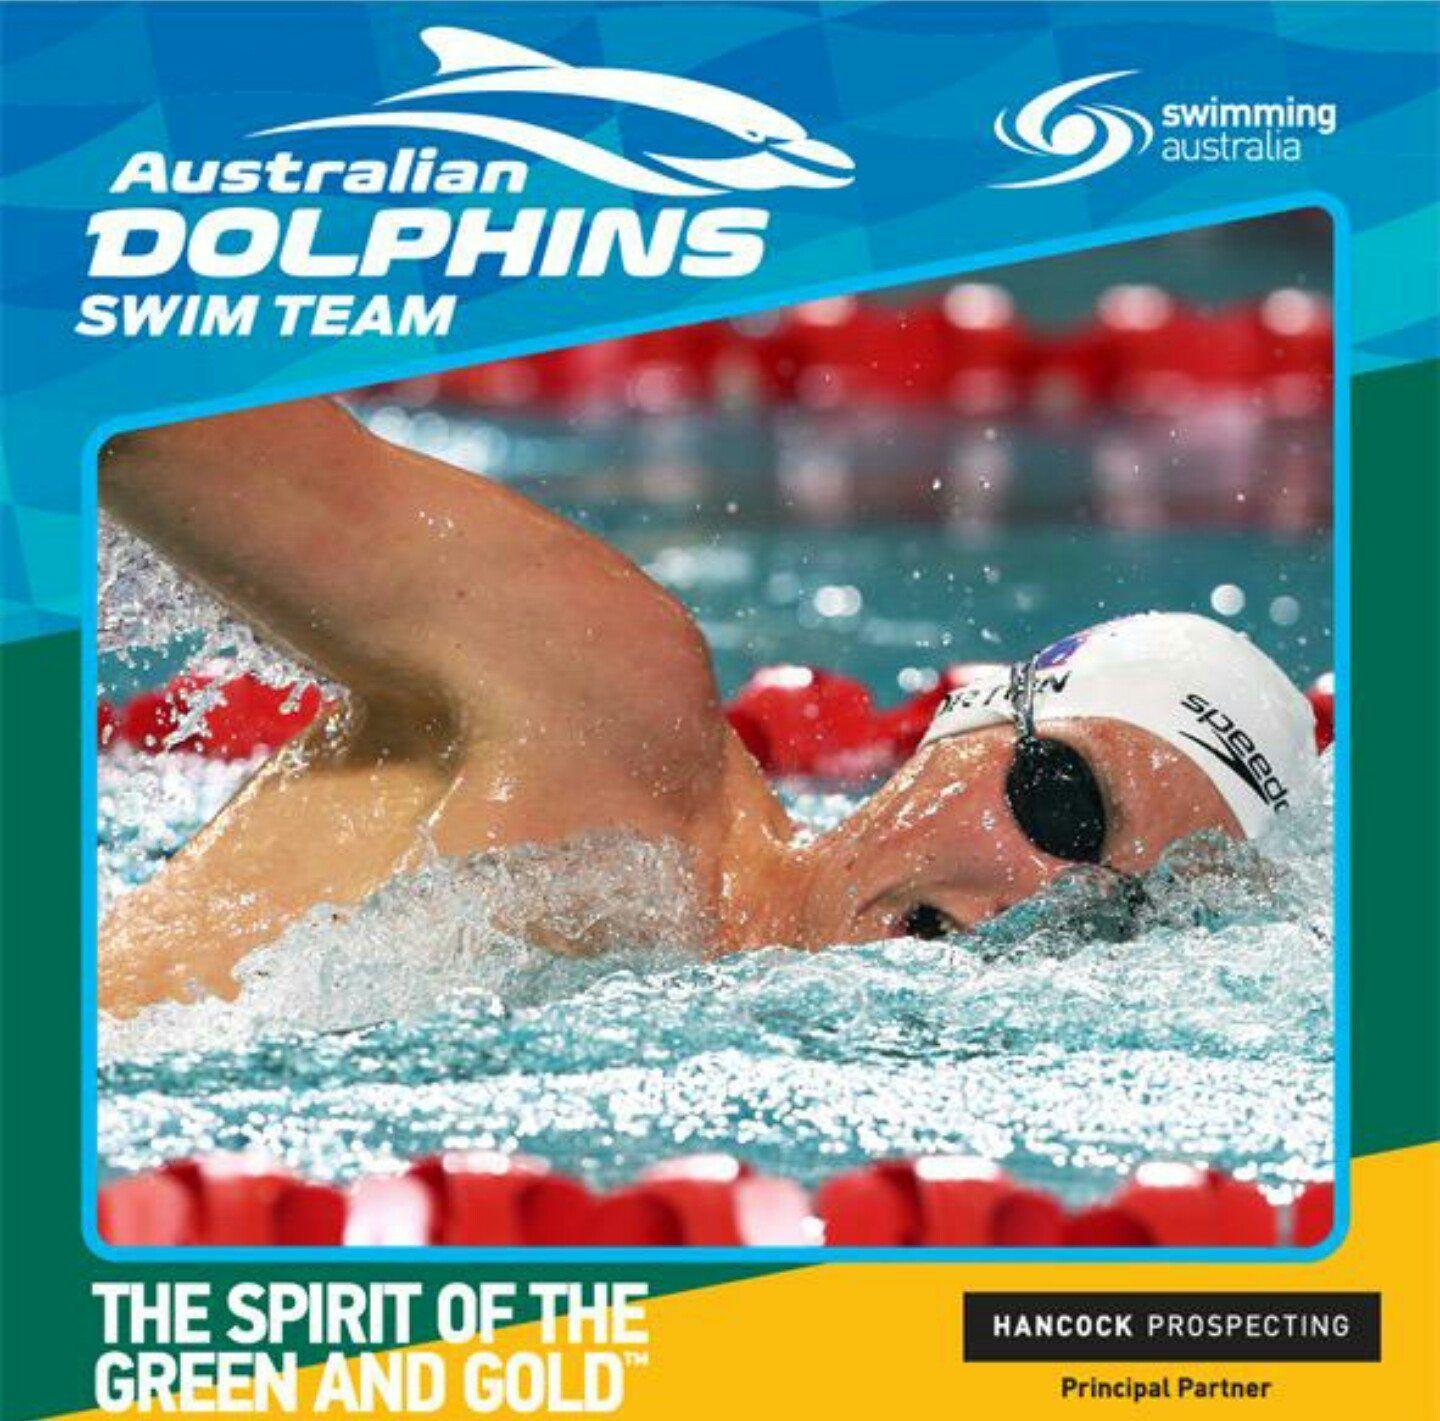 Team Savage Performance Logo - Bernard Savage at Top of List for Swimming Australia's High